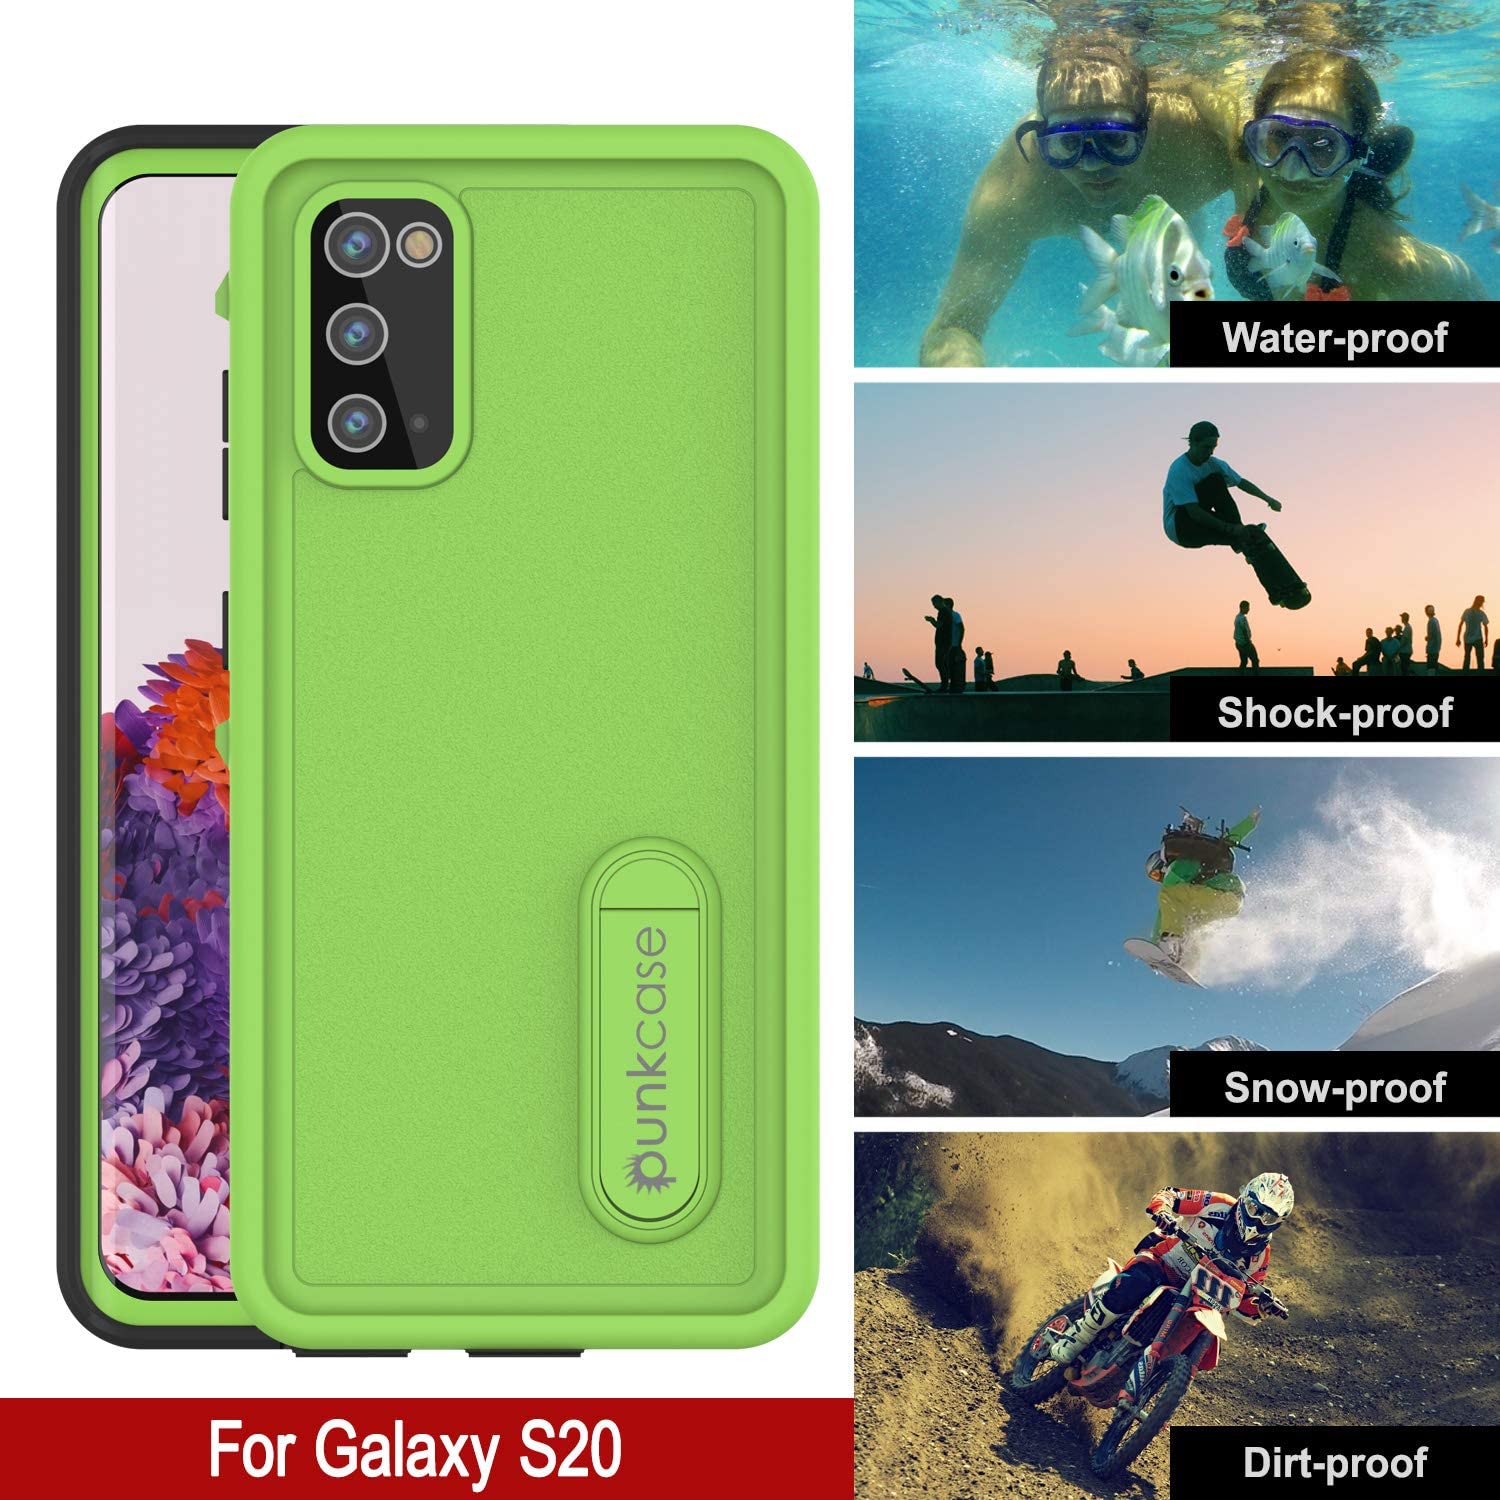 Galaxy S20 Waterproof Case, Punkcase [KickStud Series] Armor Cover [Light Green]